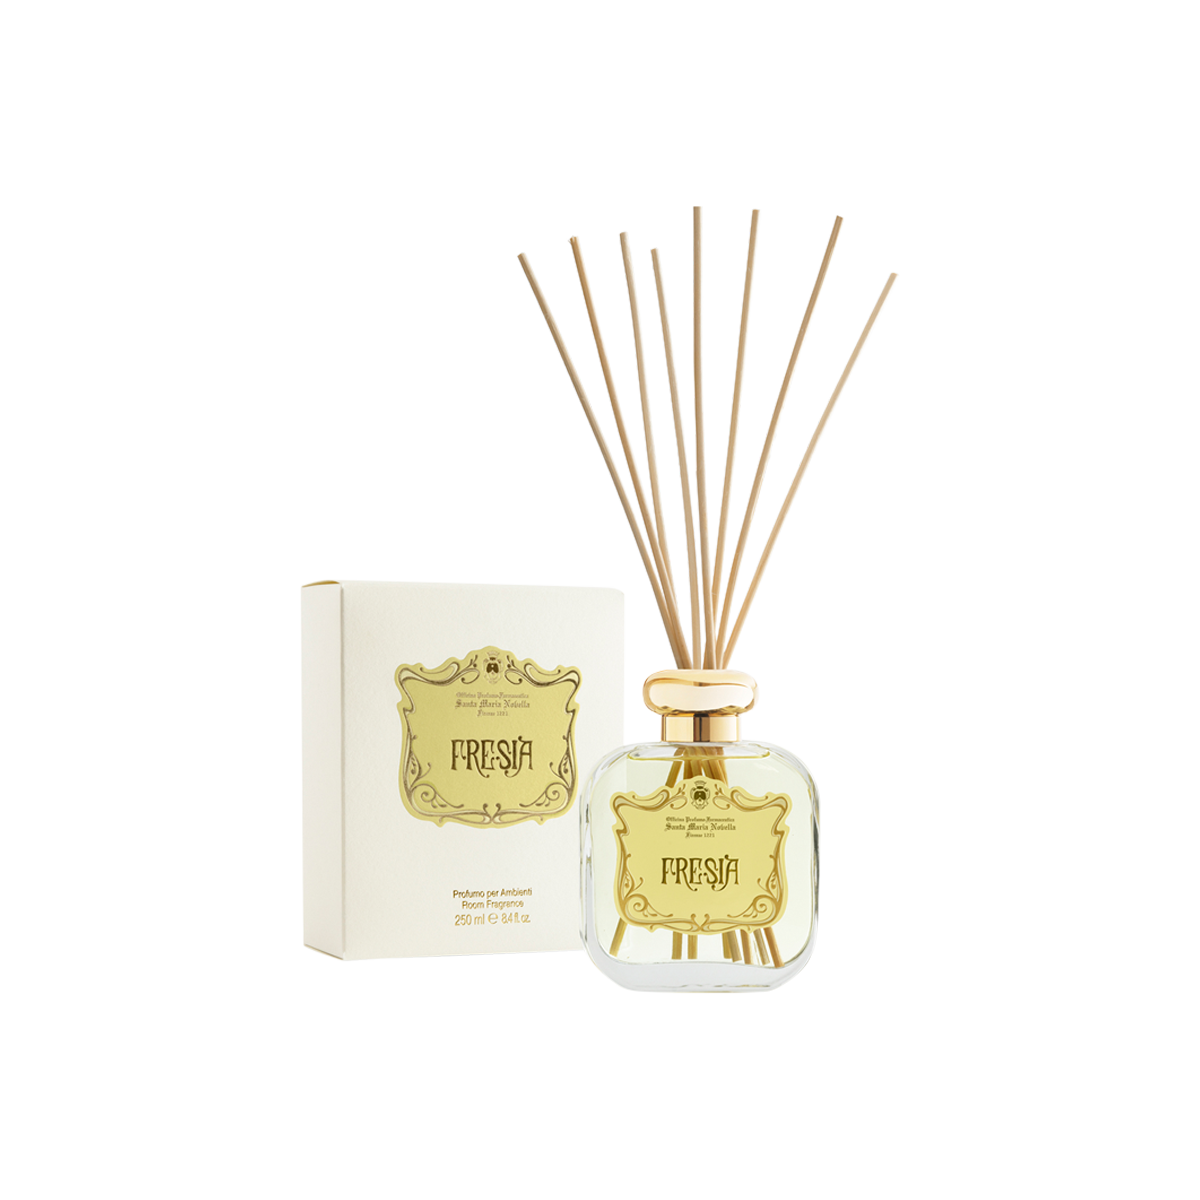 Santa Maria Novella - Fresia Room Fragrance Diffuser